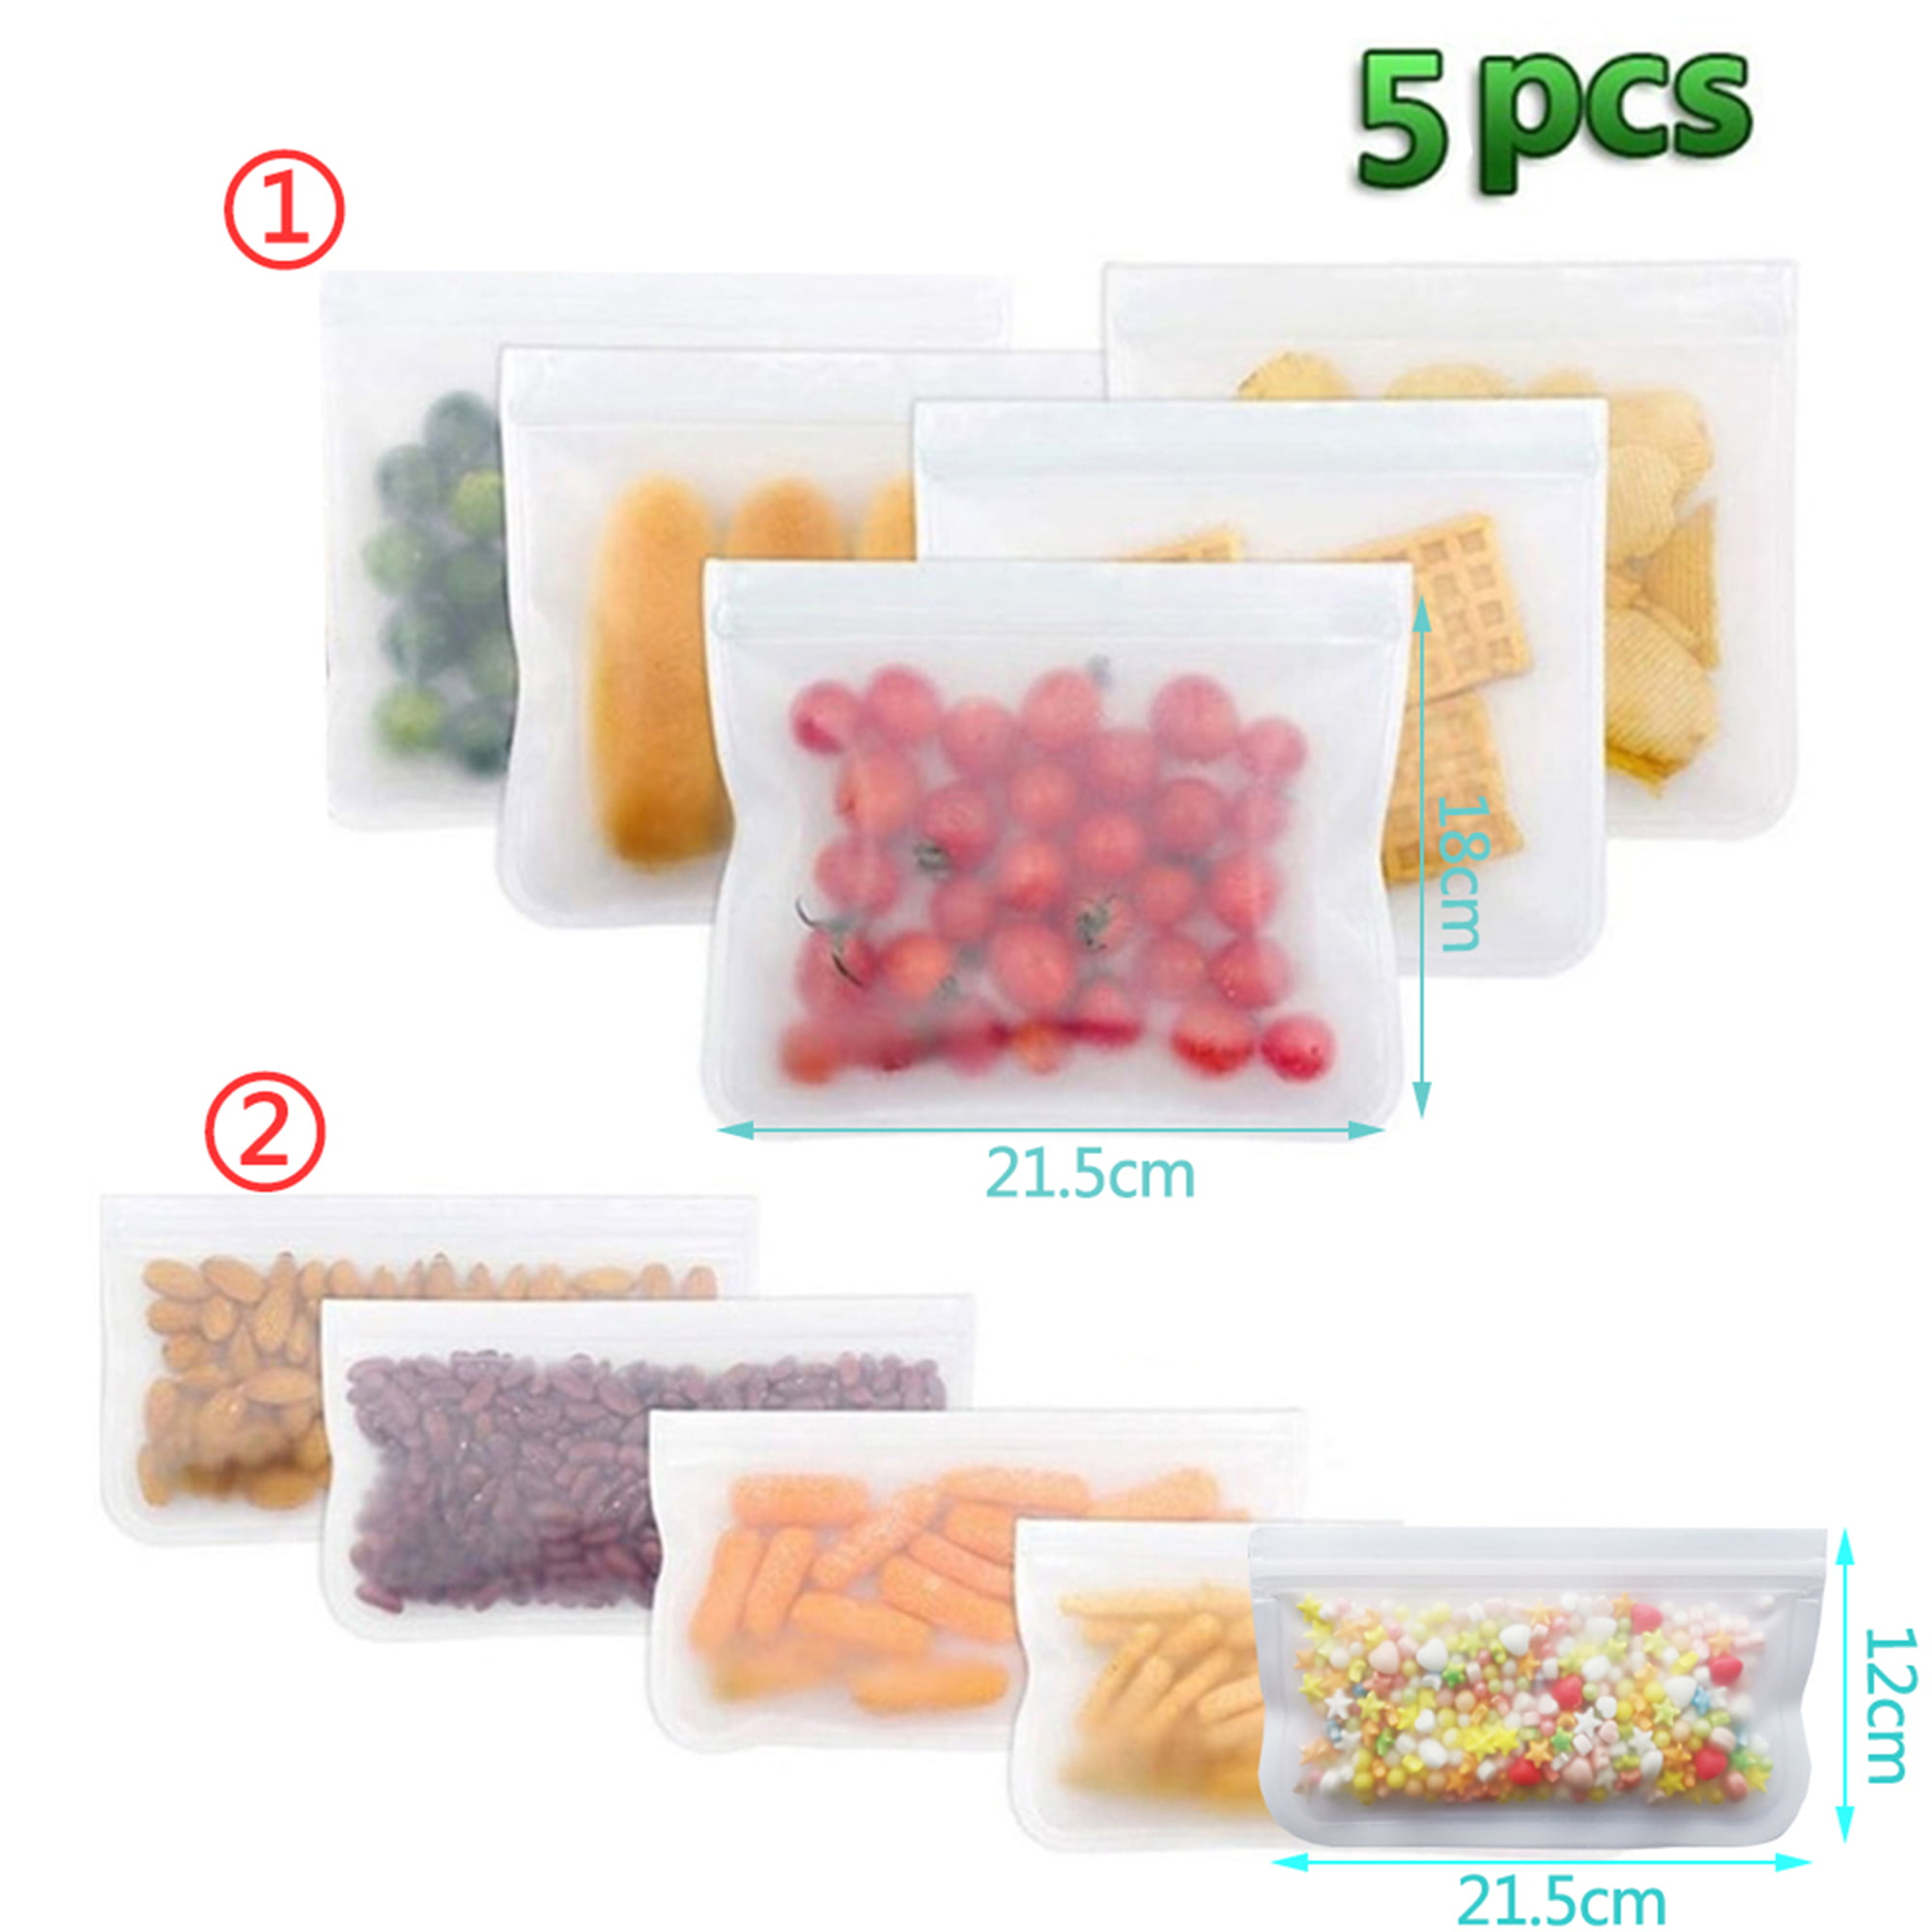 5PCS Silicone Freshness Food Storage Bag Reusable Freezer Ziplock Leakproof Bags 